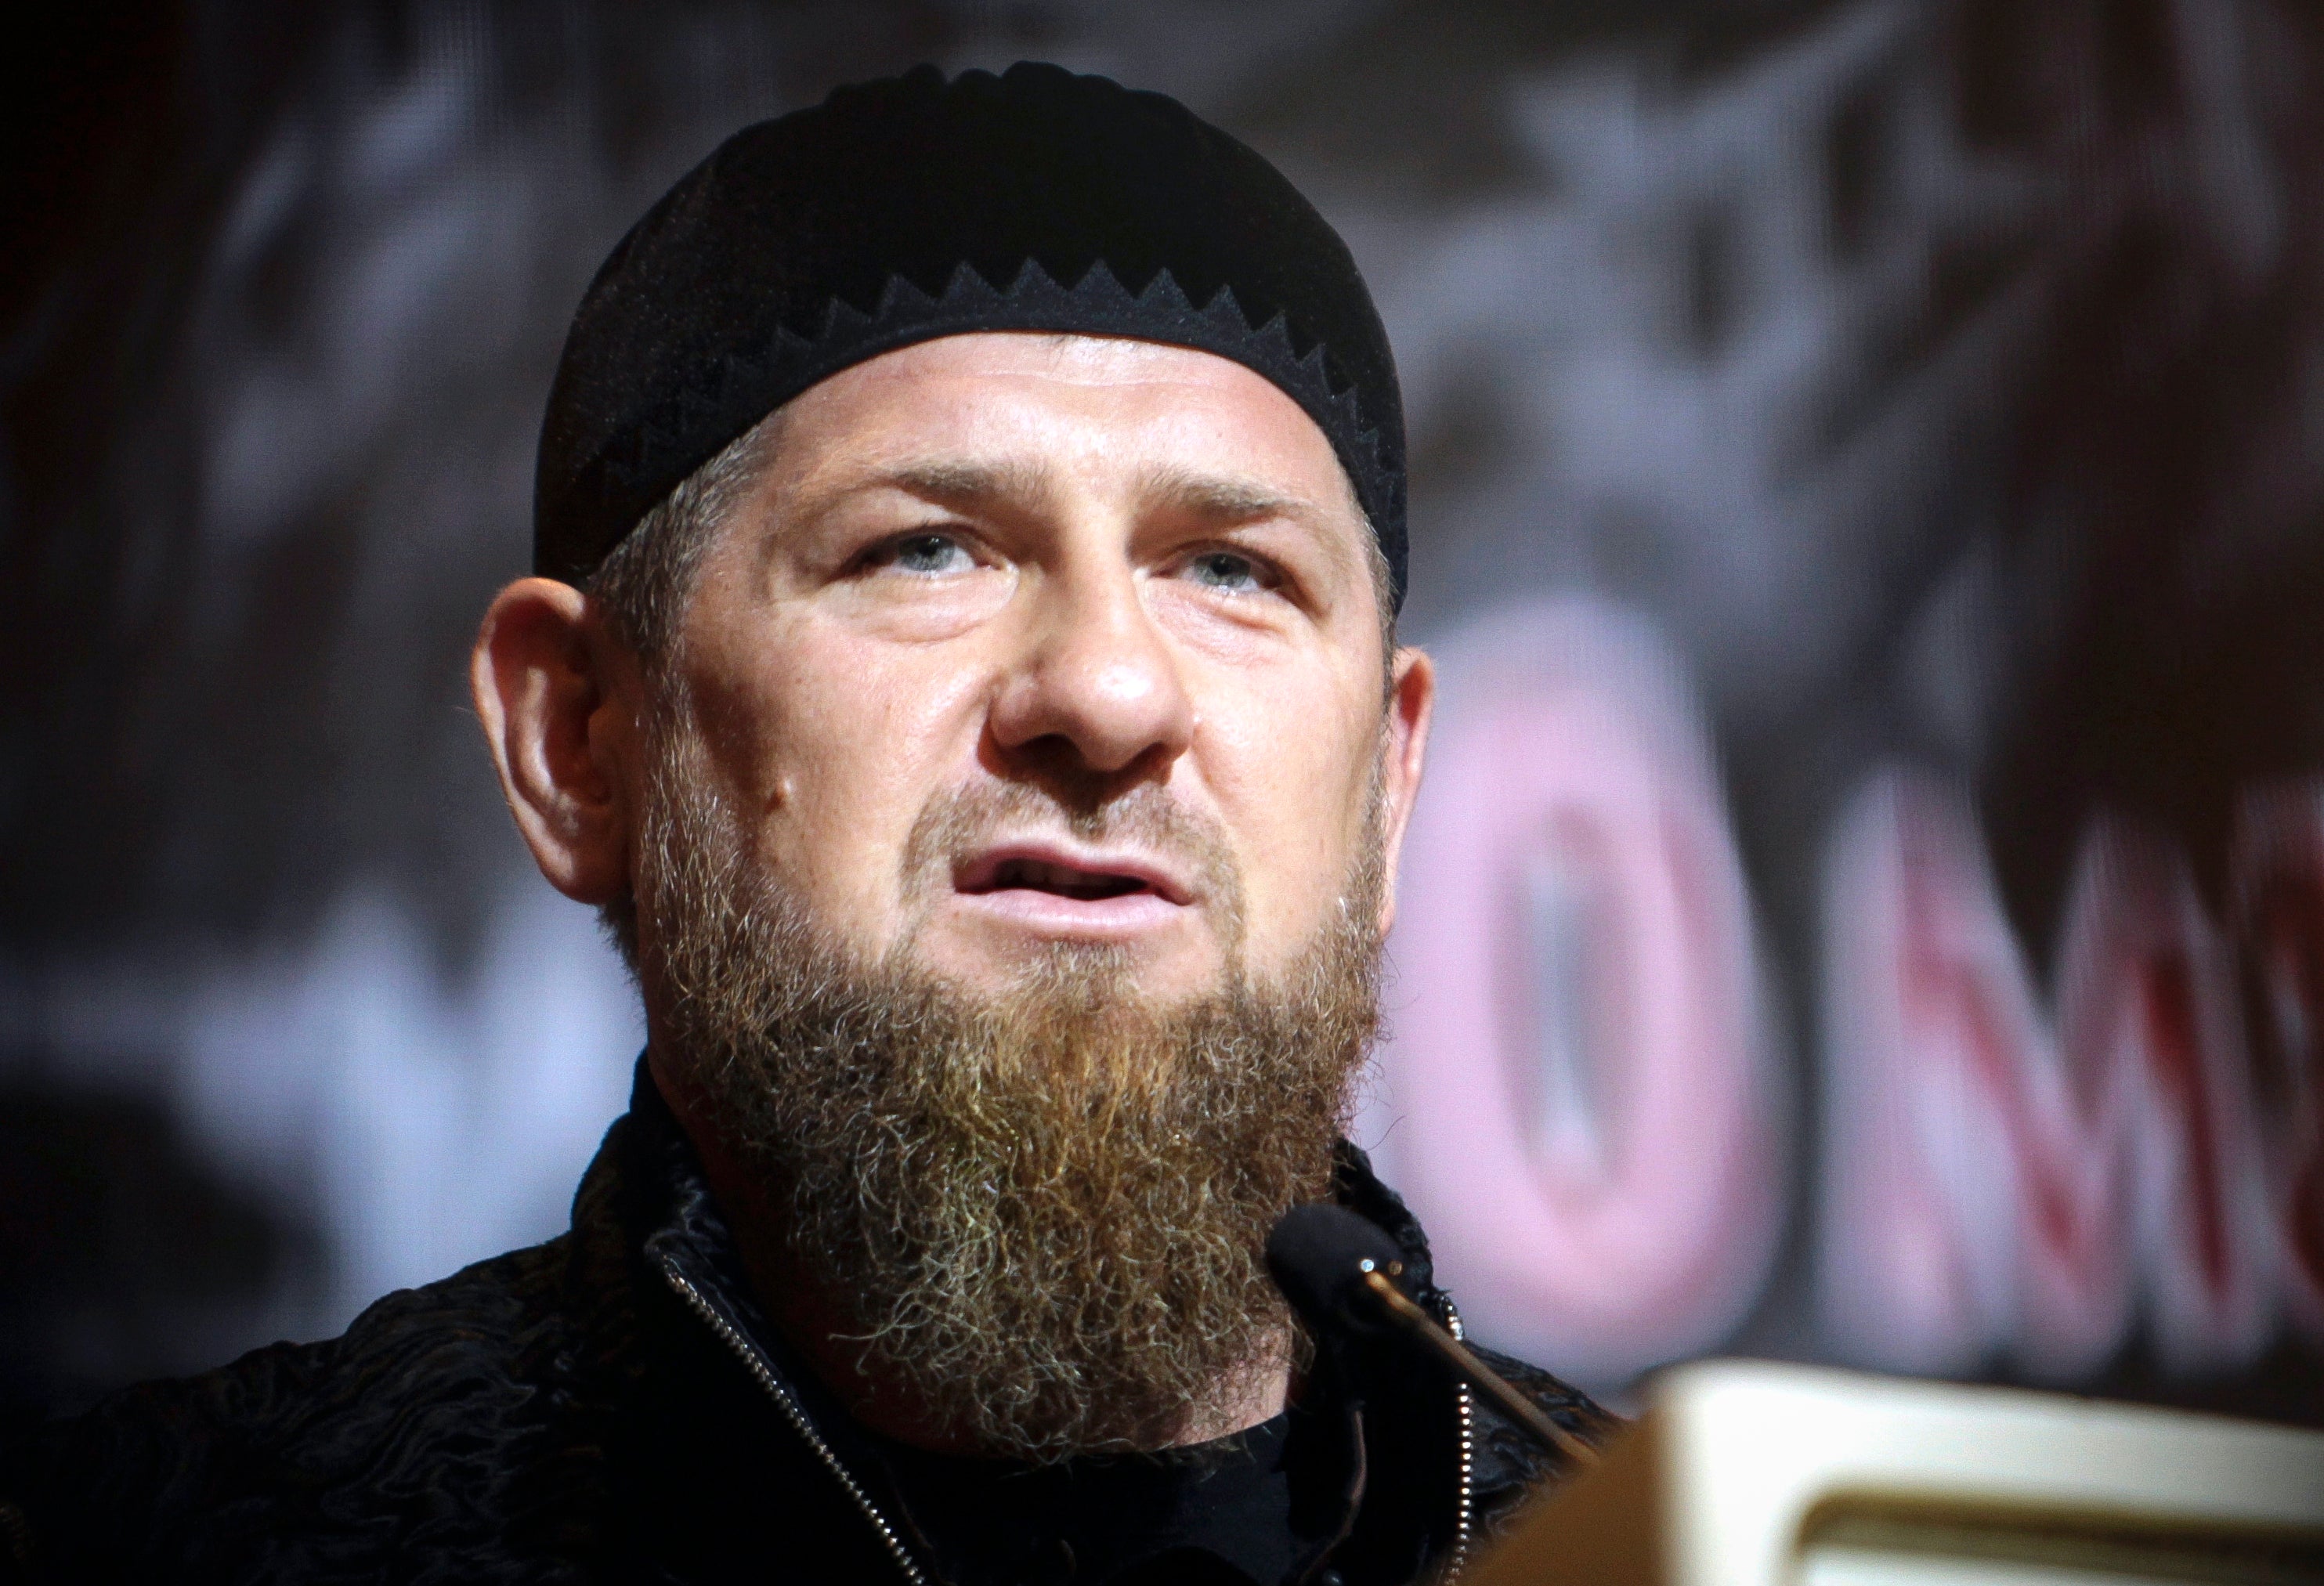 Chechnya’s leader Ramzan Kadyrov